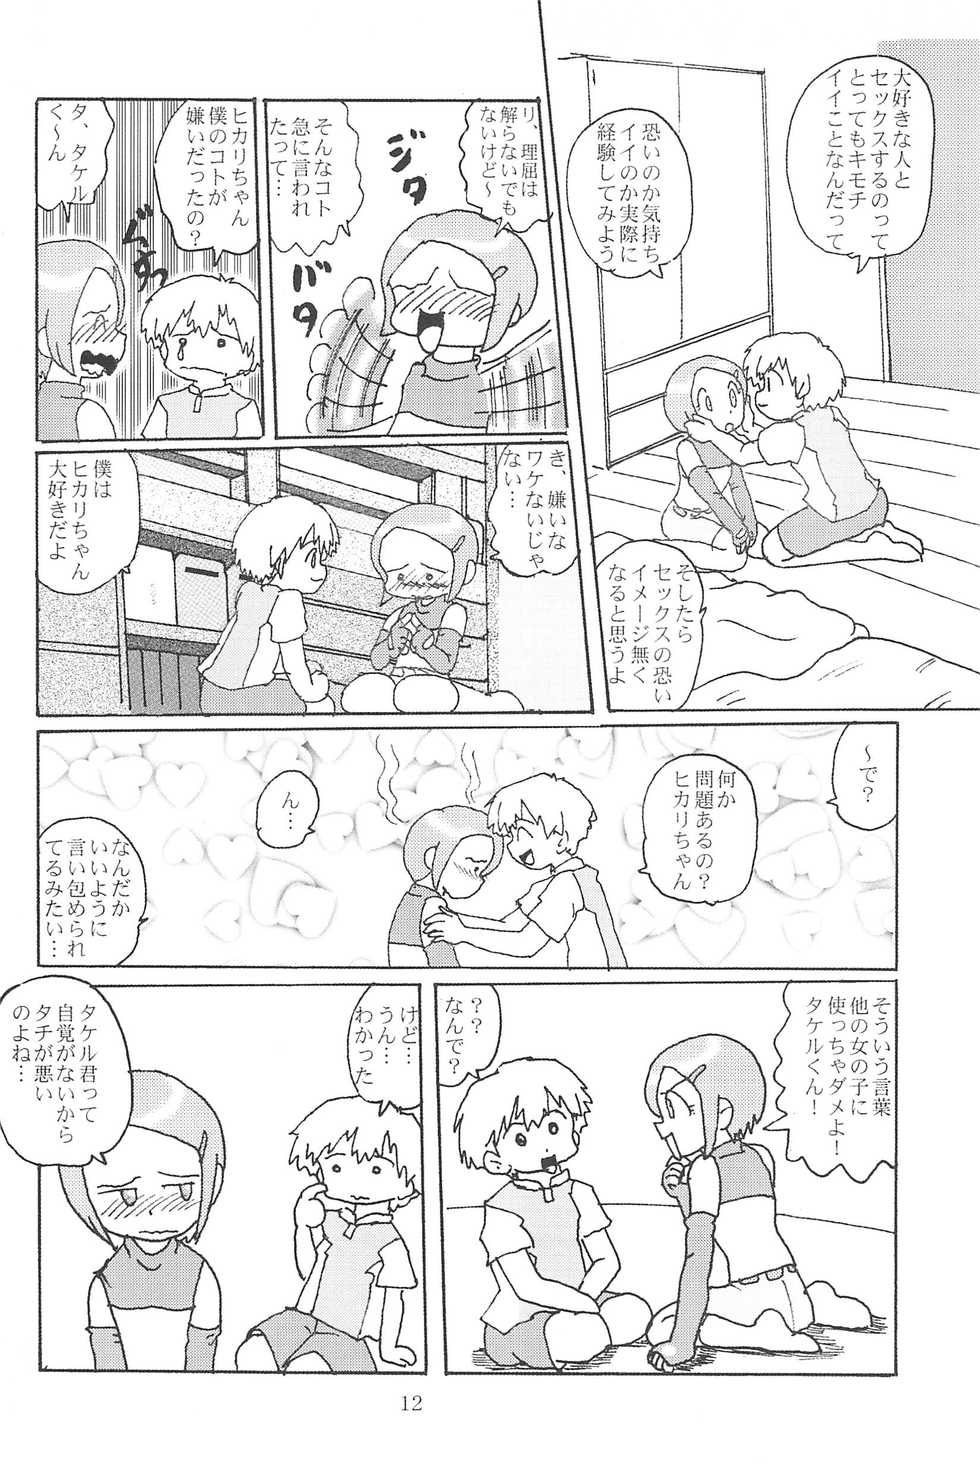 (CR28) [Izumiya] Blow Up 8 (Digimon Adventure 02) - Page 14